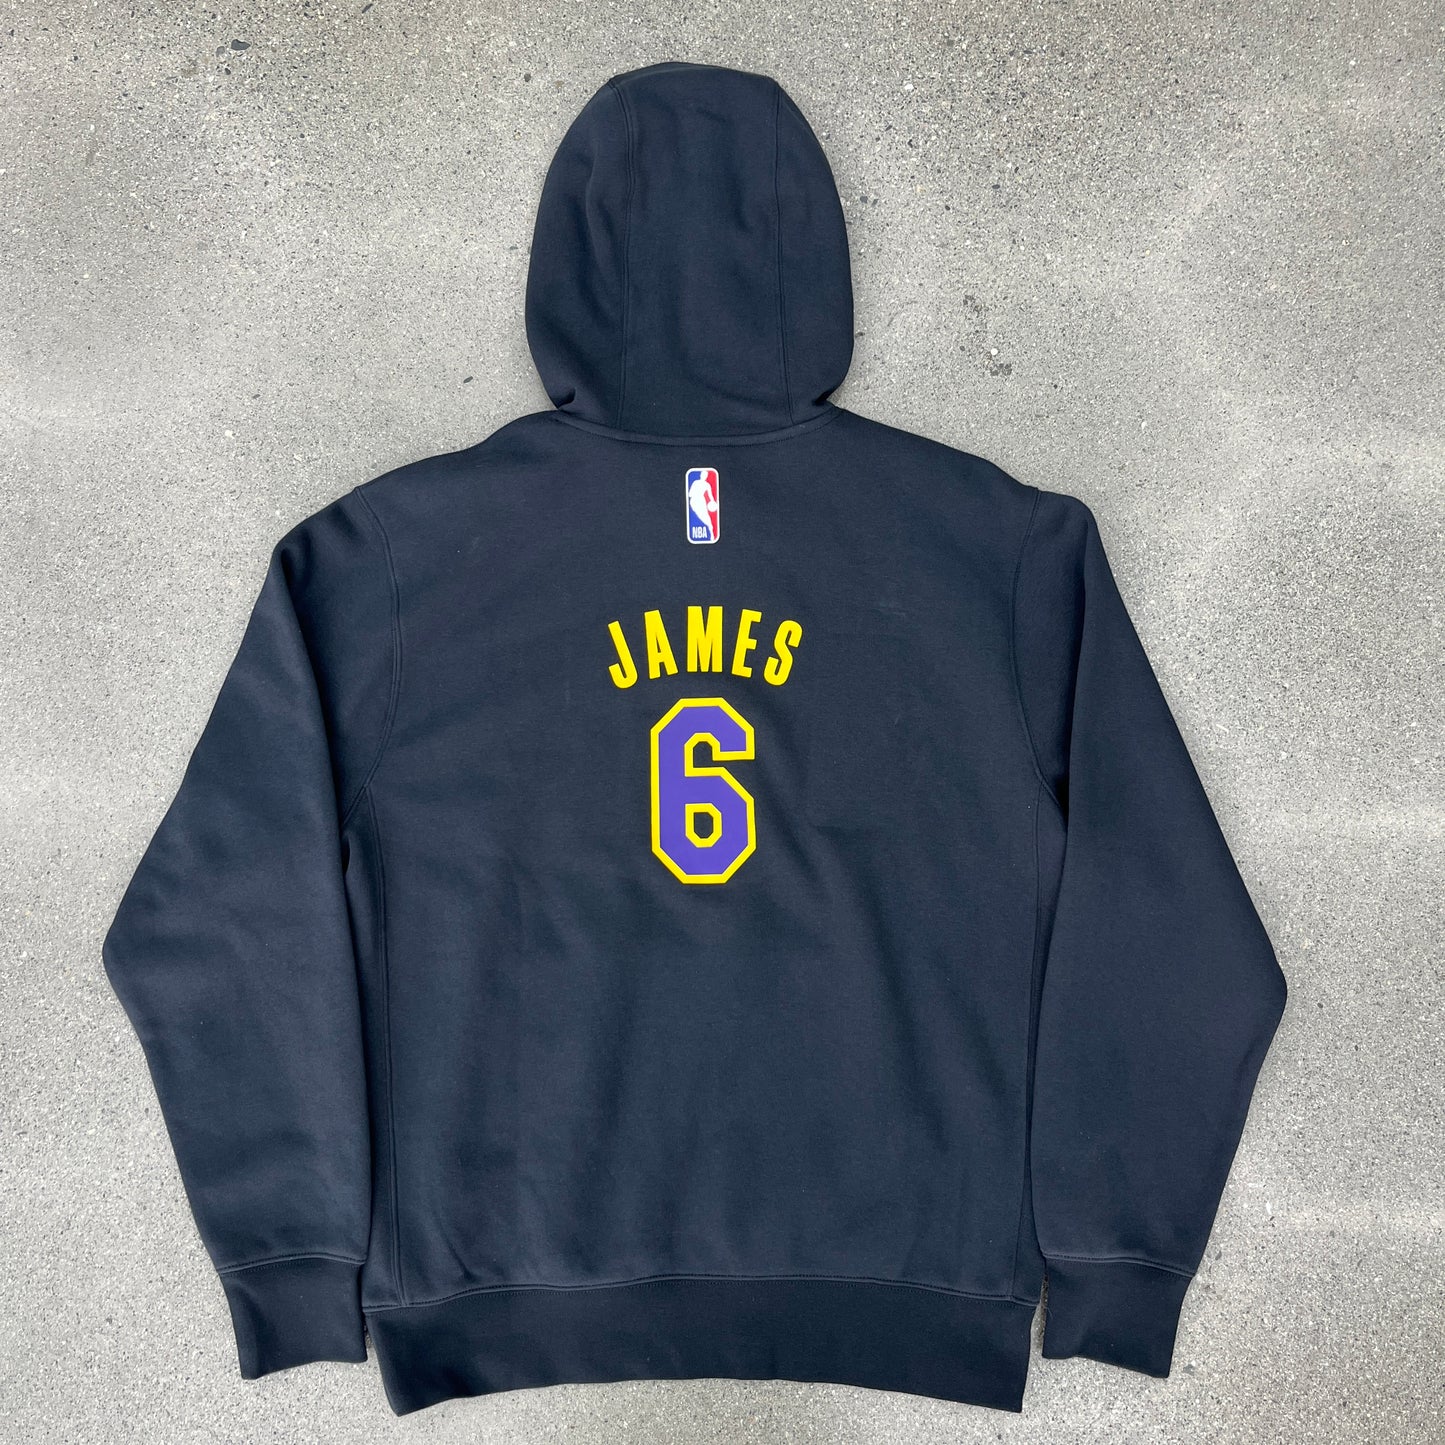 Lakers Lebron Nike Hoodie Black #6 SZ M (NEW)